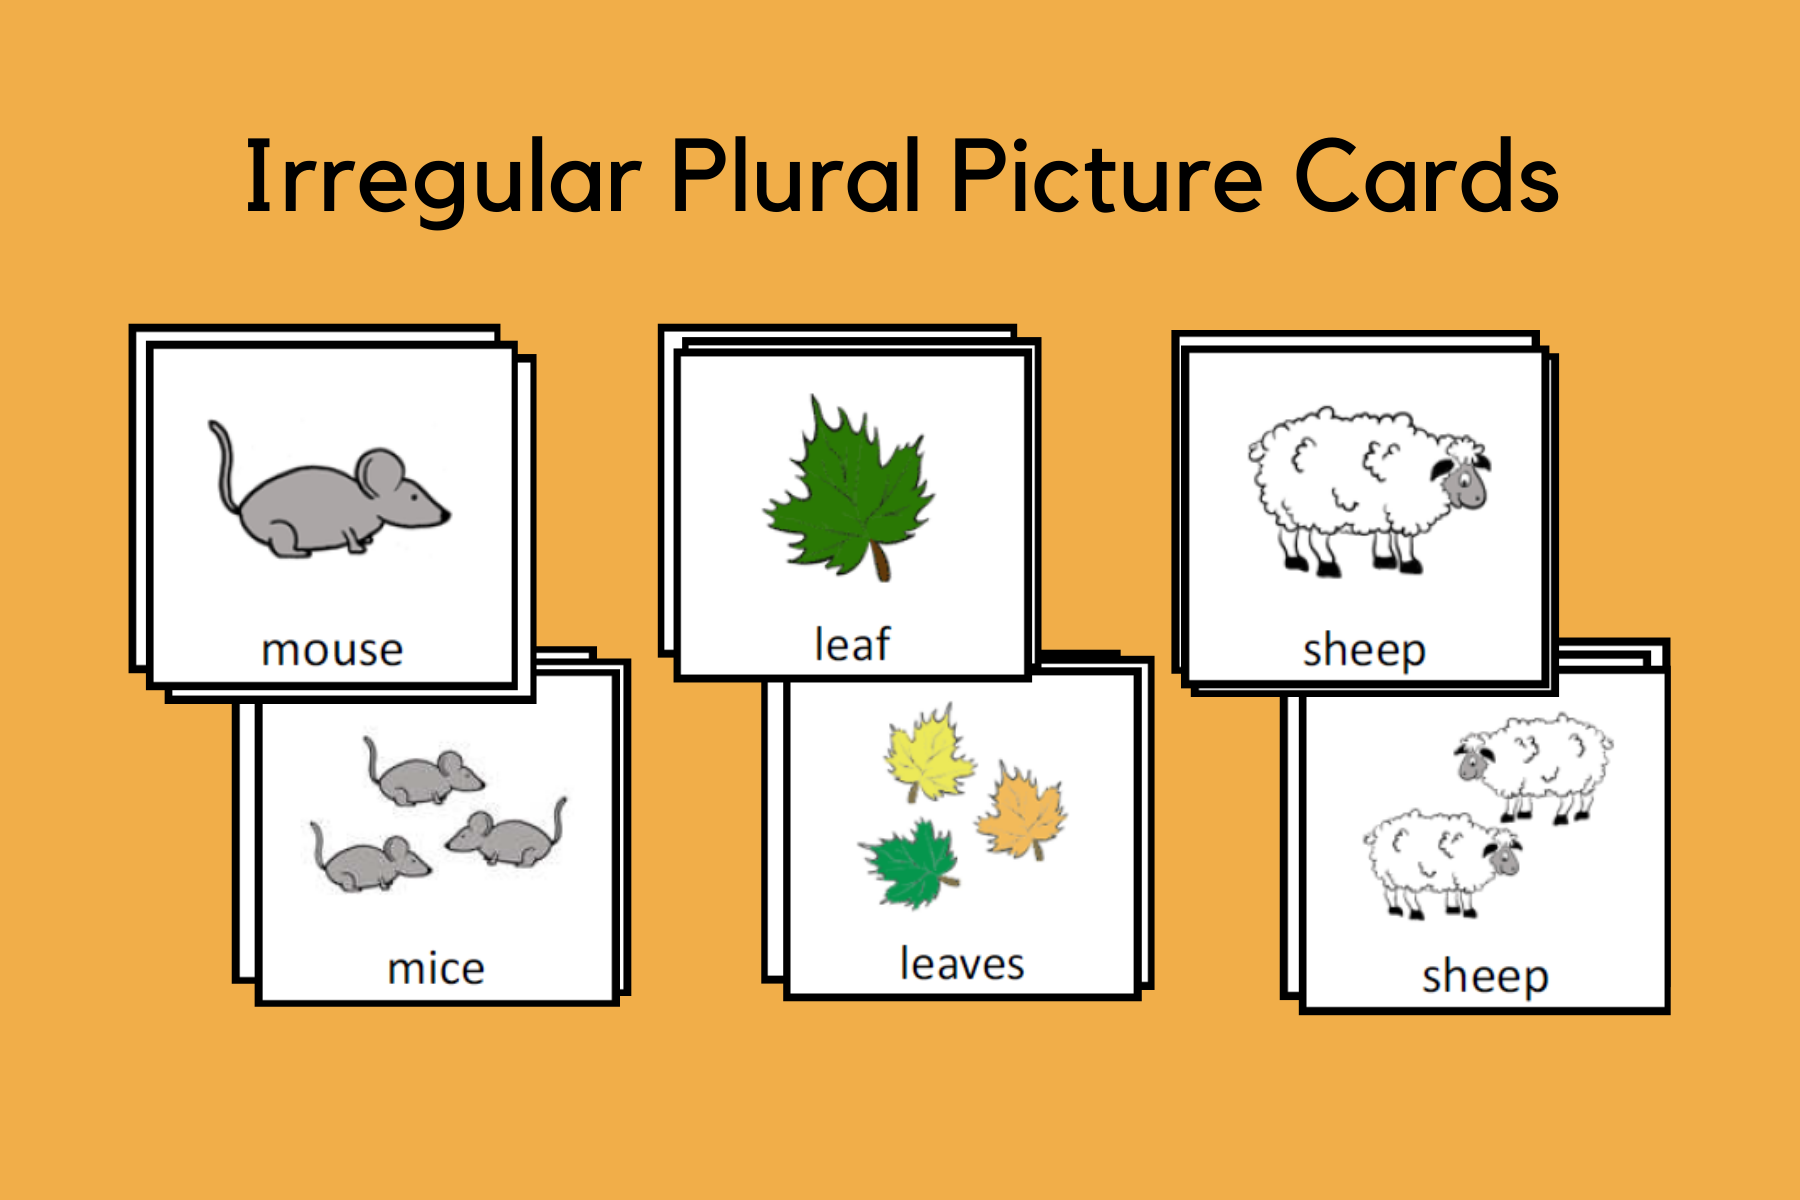 Irregular Plural Picture Cards